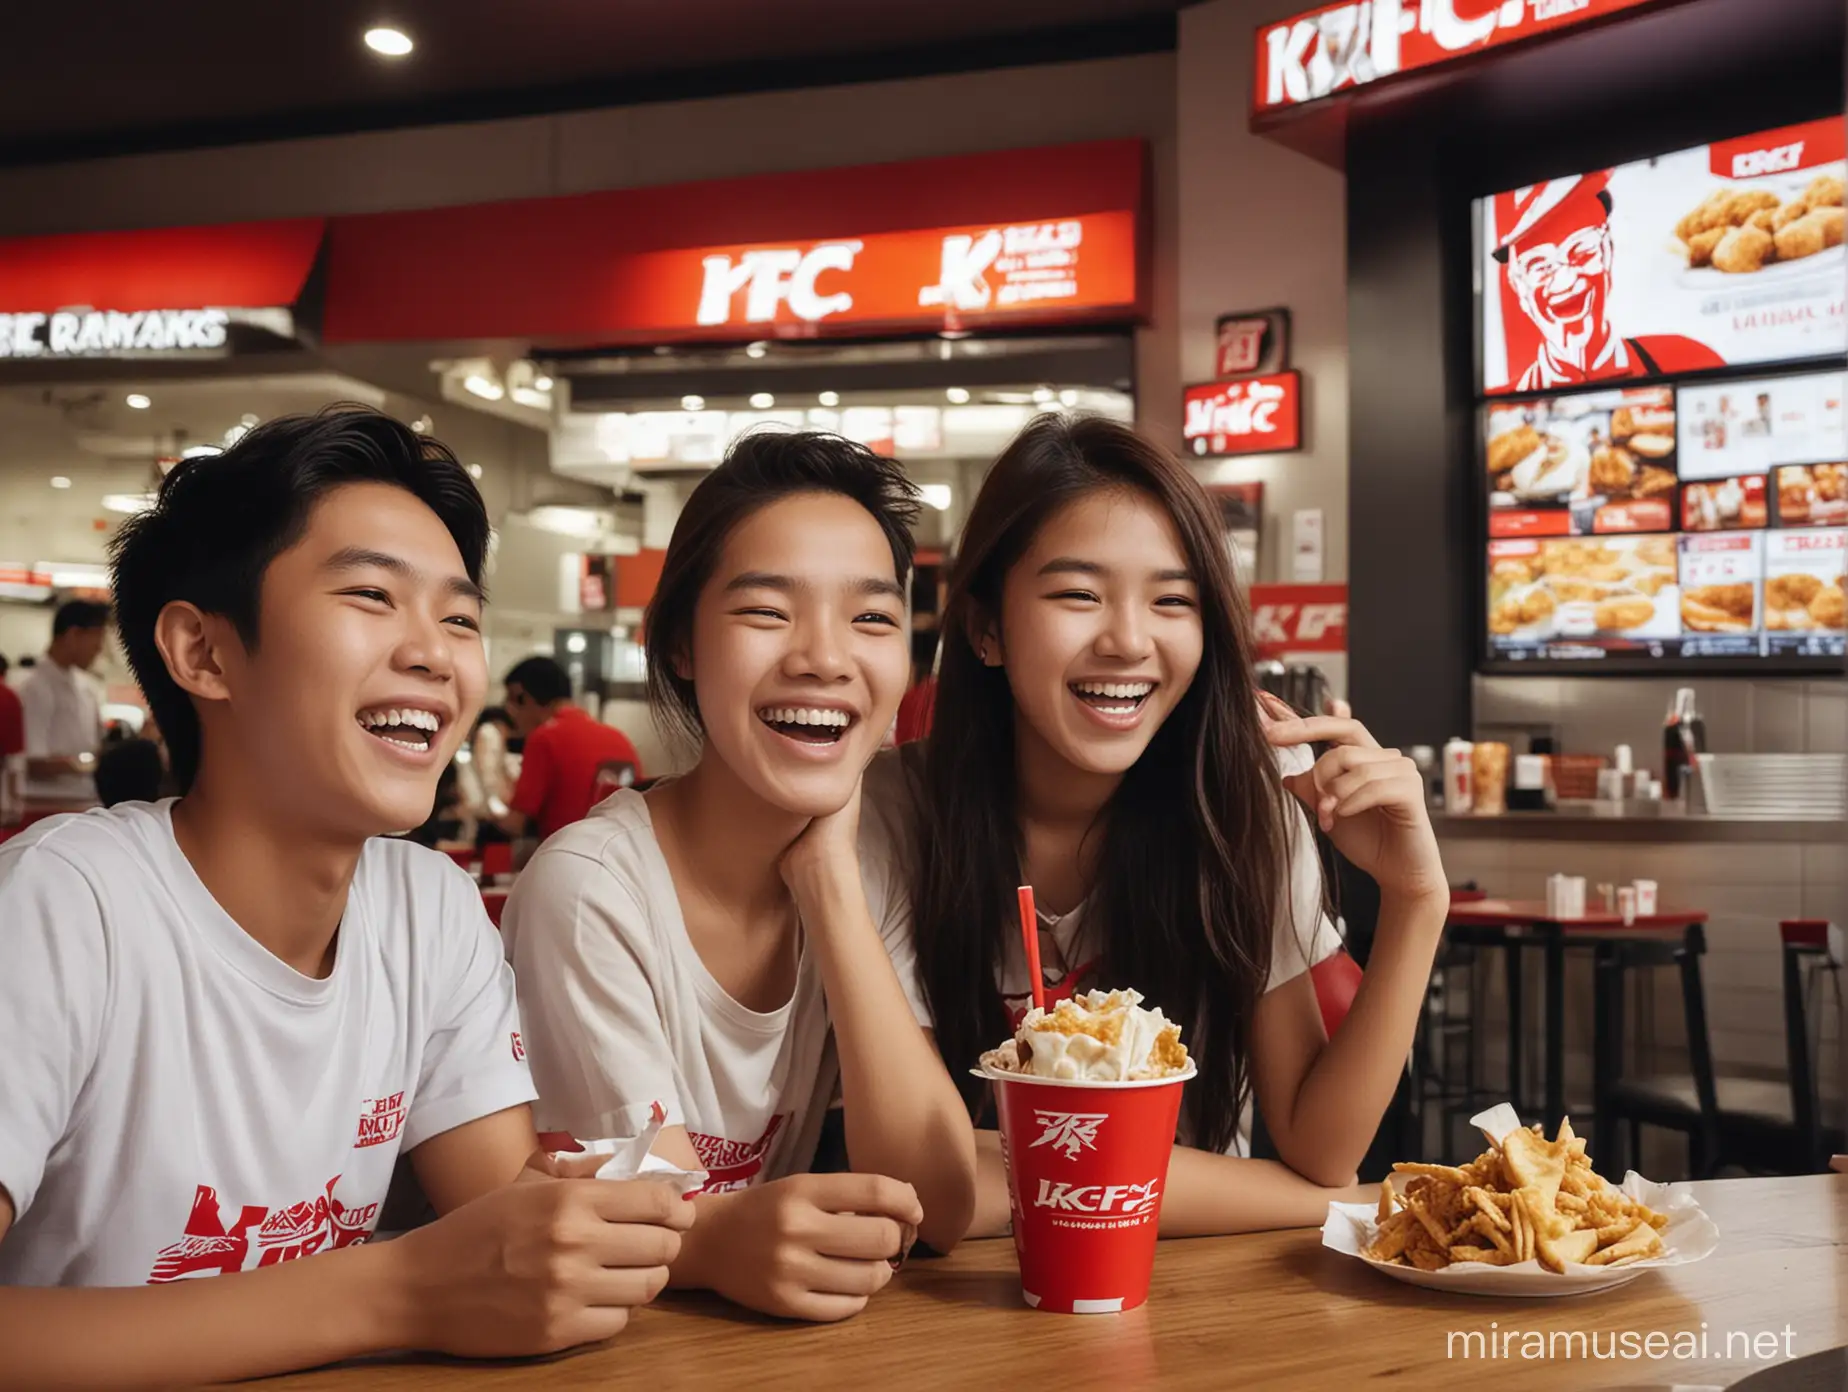 Three Malaysia teenager laughing  in KFC restaurant